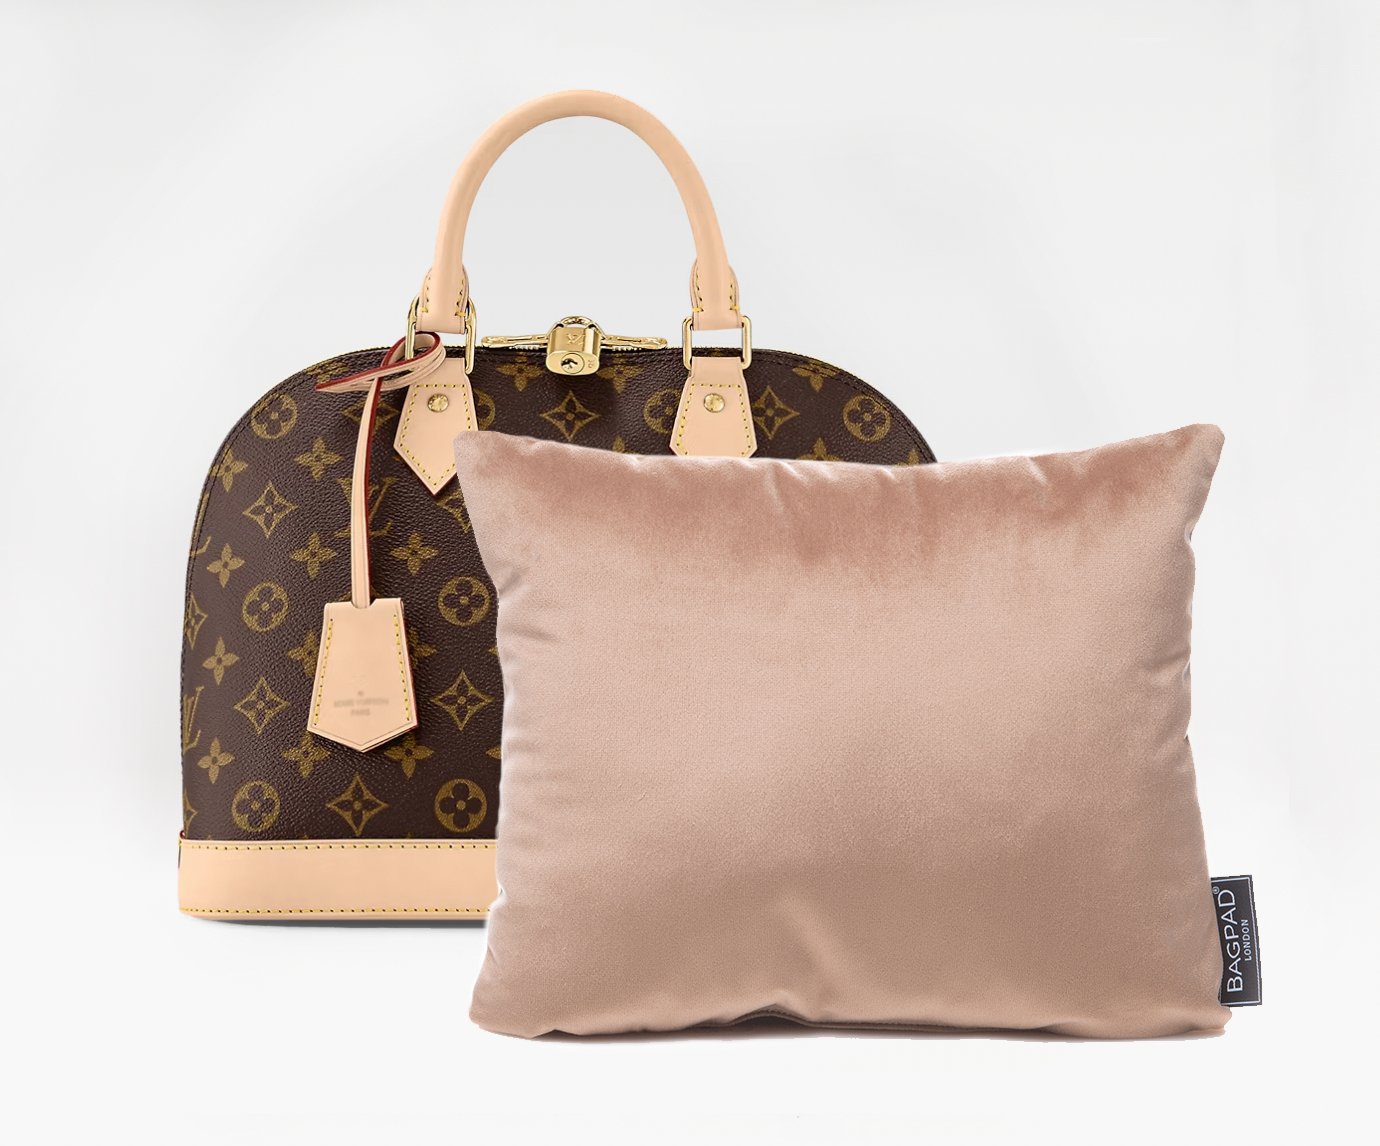 Purse Pillow for Louis Vuitton Speedy Bag Models, Bag Shaper